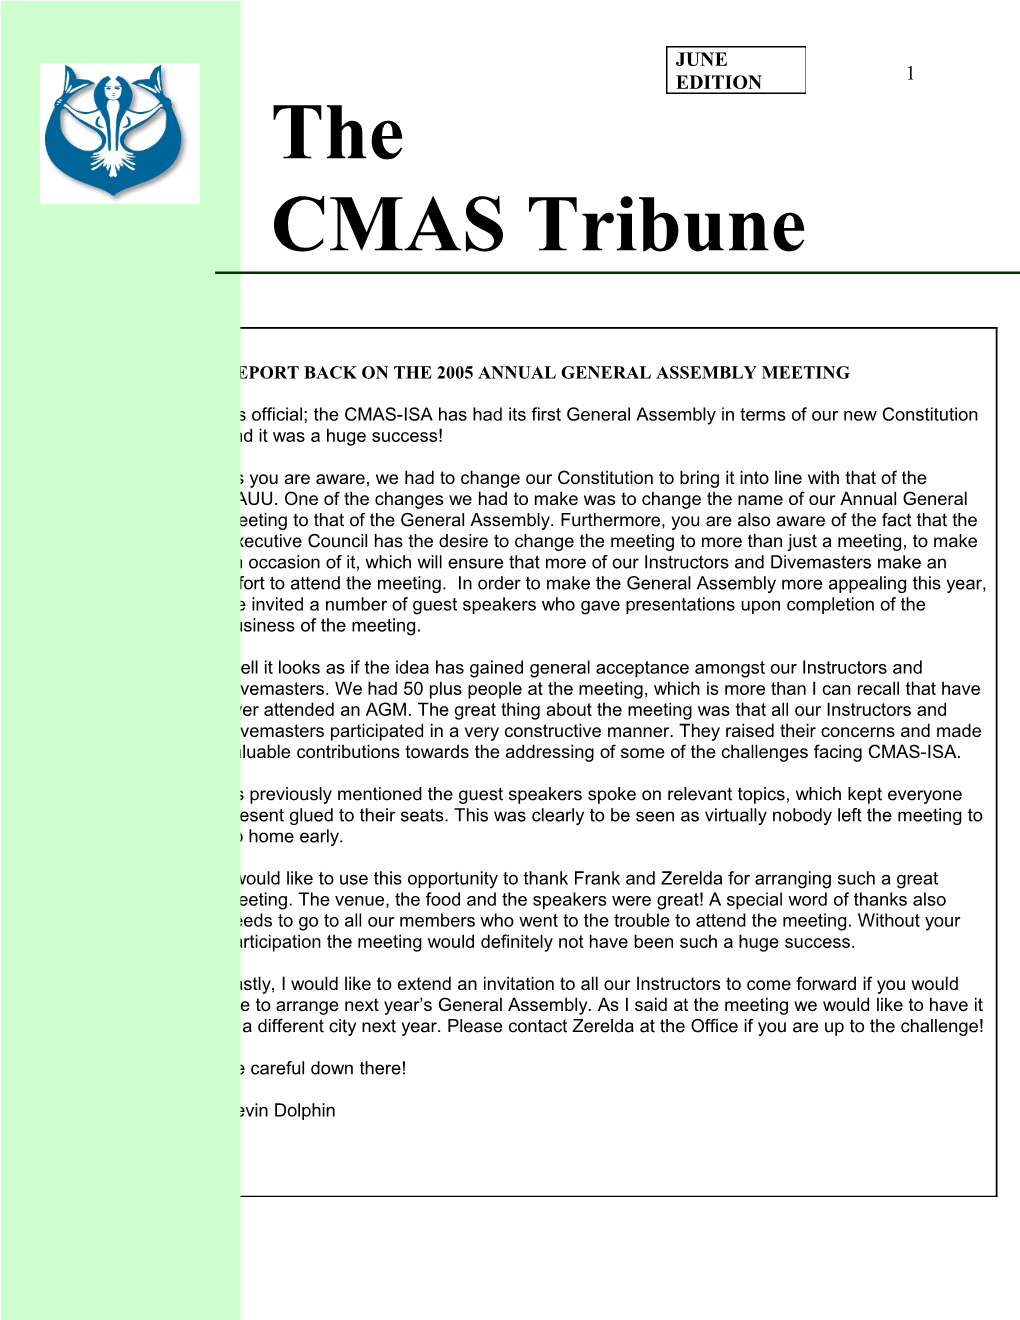 The CMAS Tribune